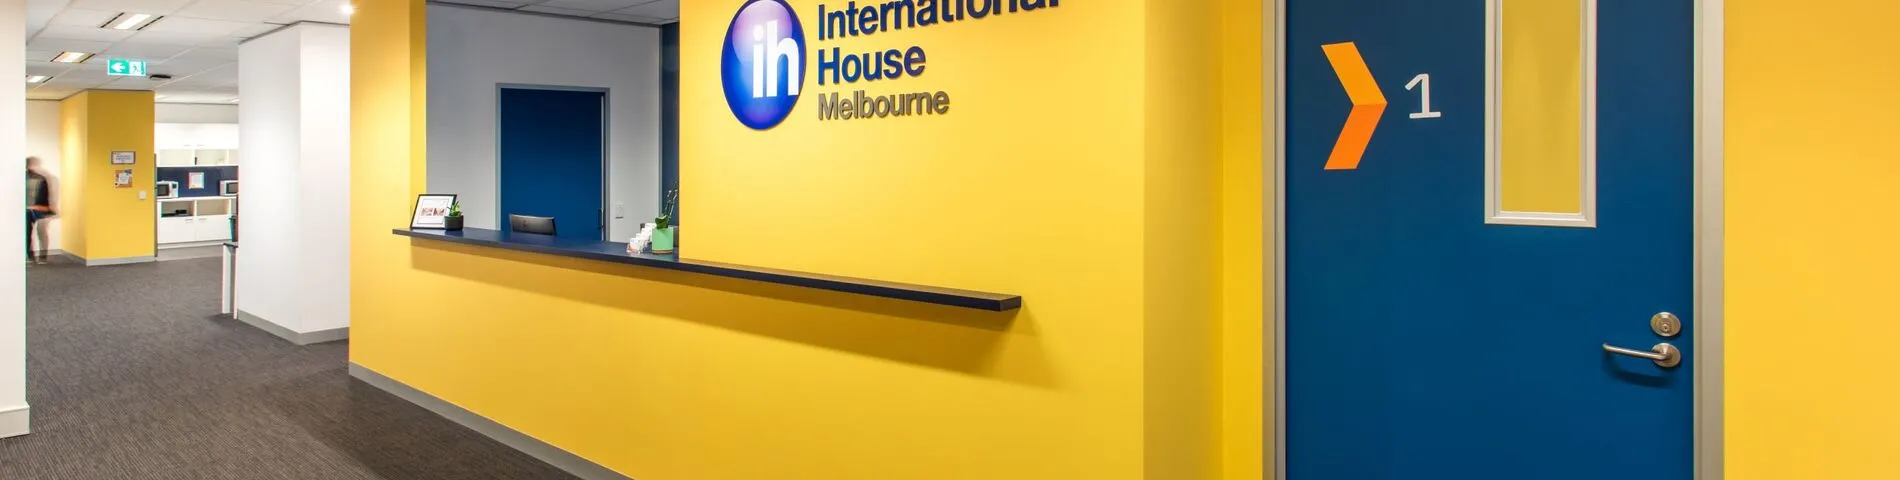 International House صورة 1